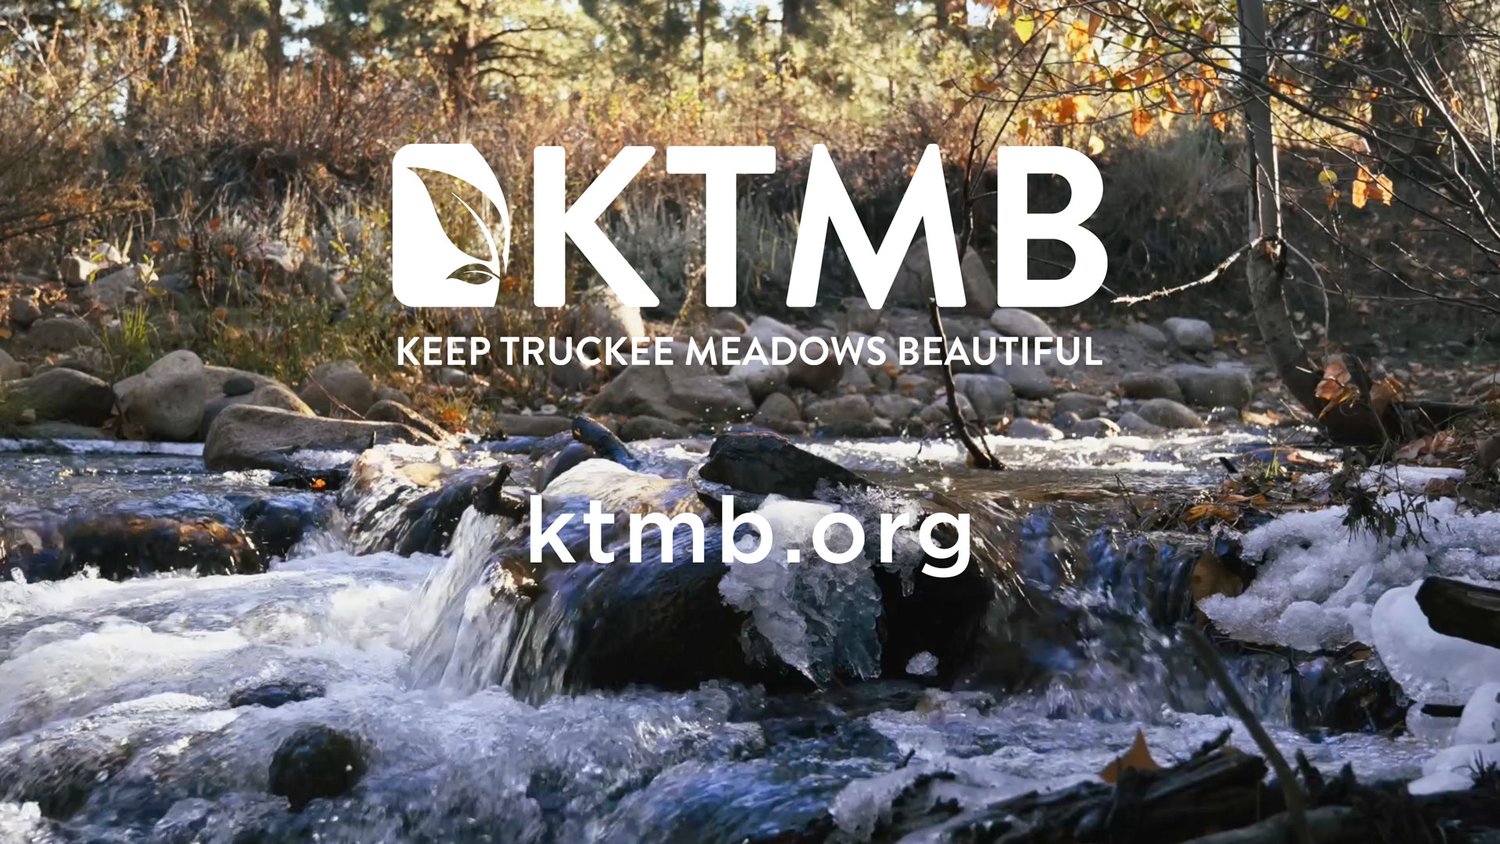 (c) Ktmb.org